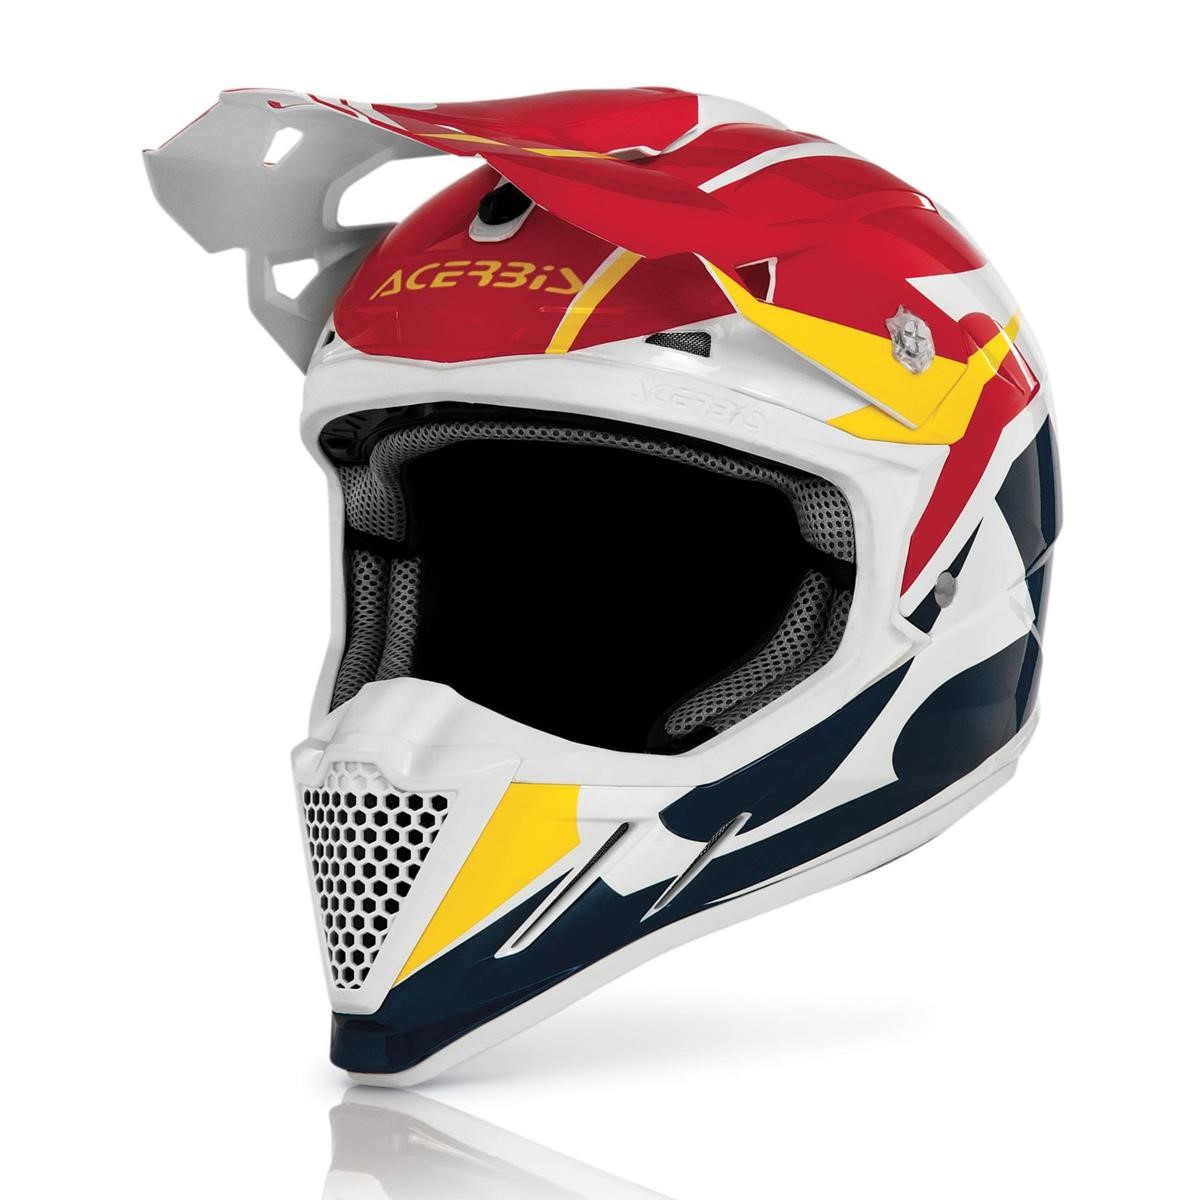 Acerbis Helmet Profile 2.0 Red